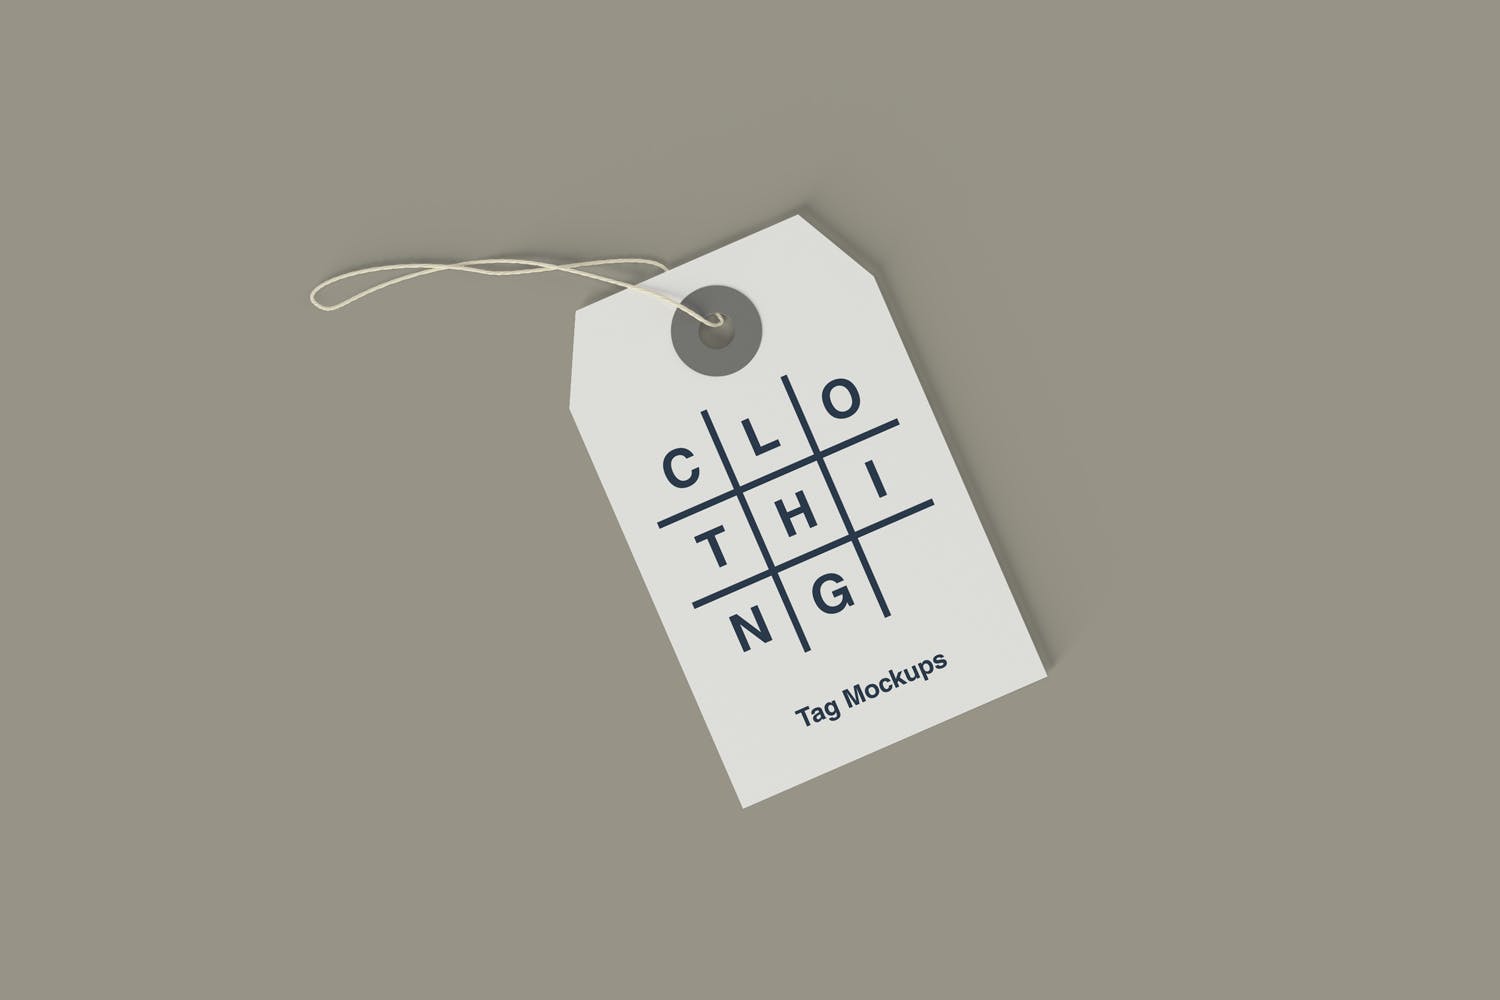 服装纸质吊牌标签设计图样机第一素材精选 Clothing Tag Mockups插图(3)